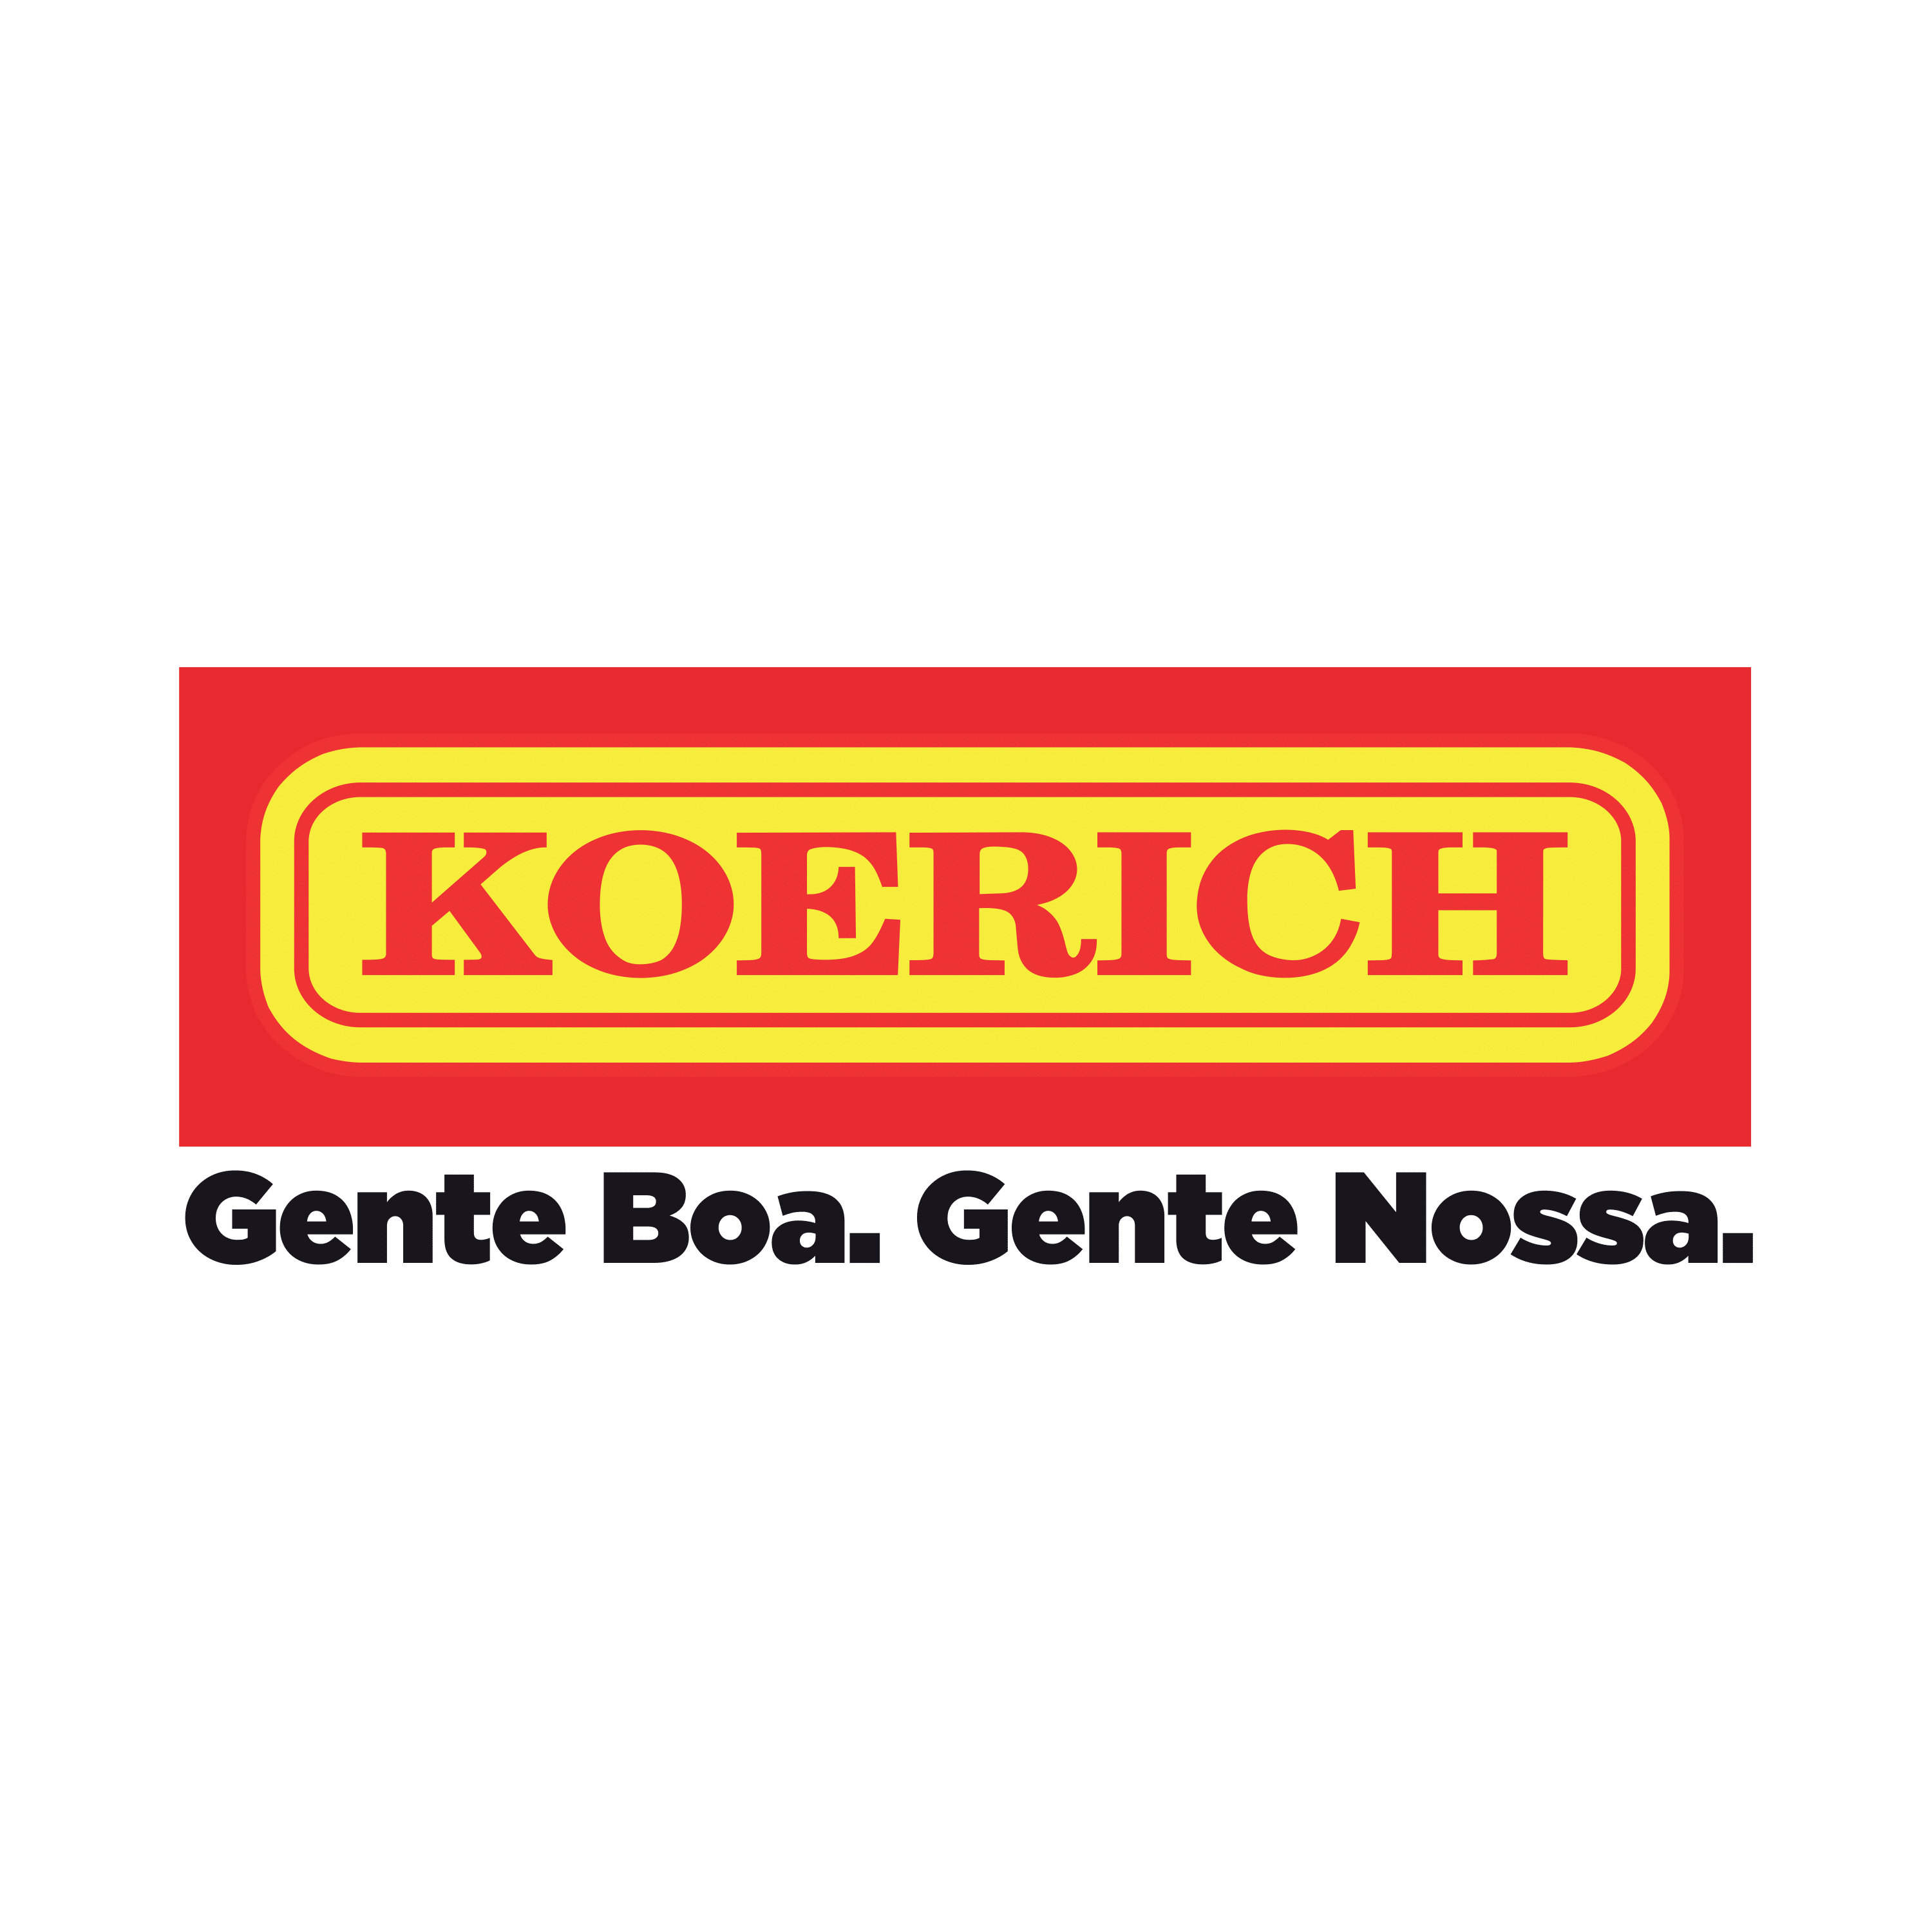 Koerich - LOGO-1